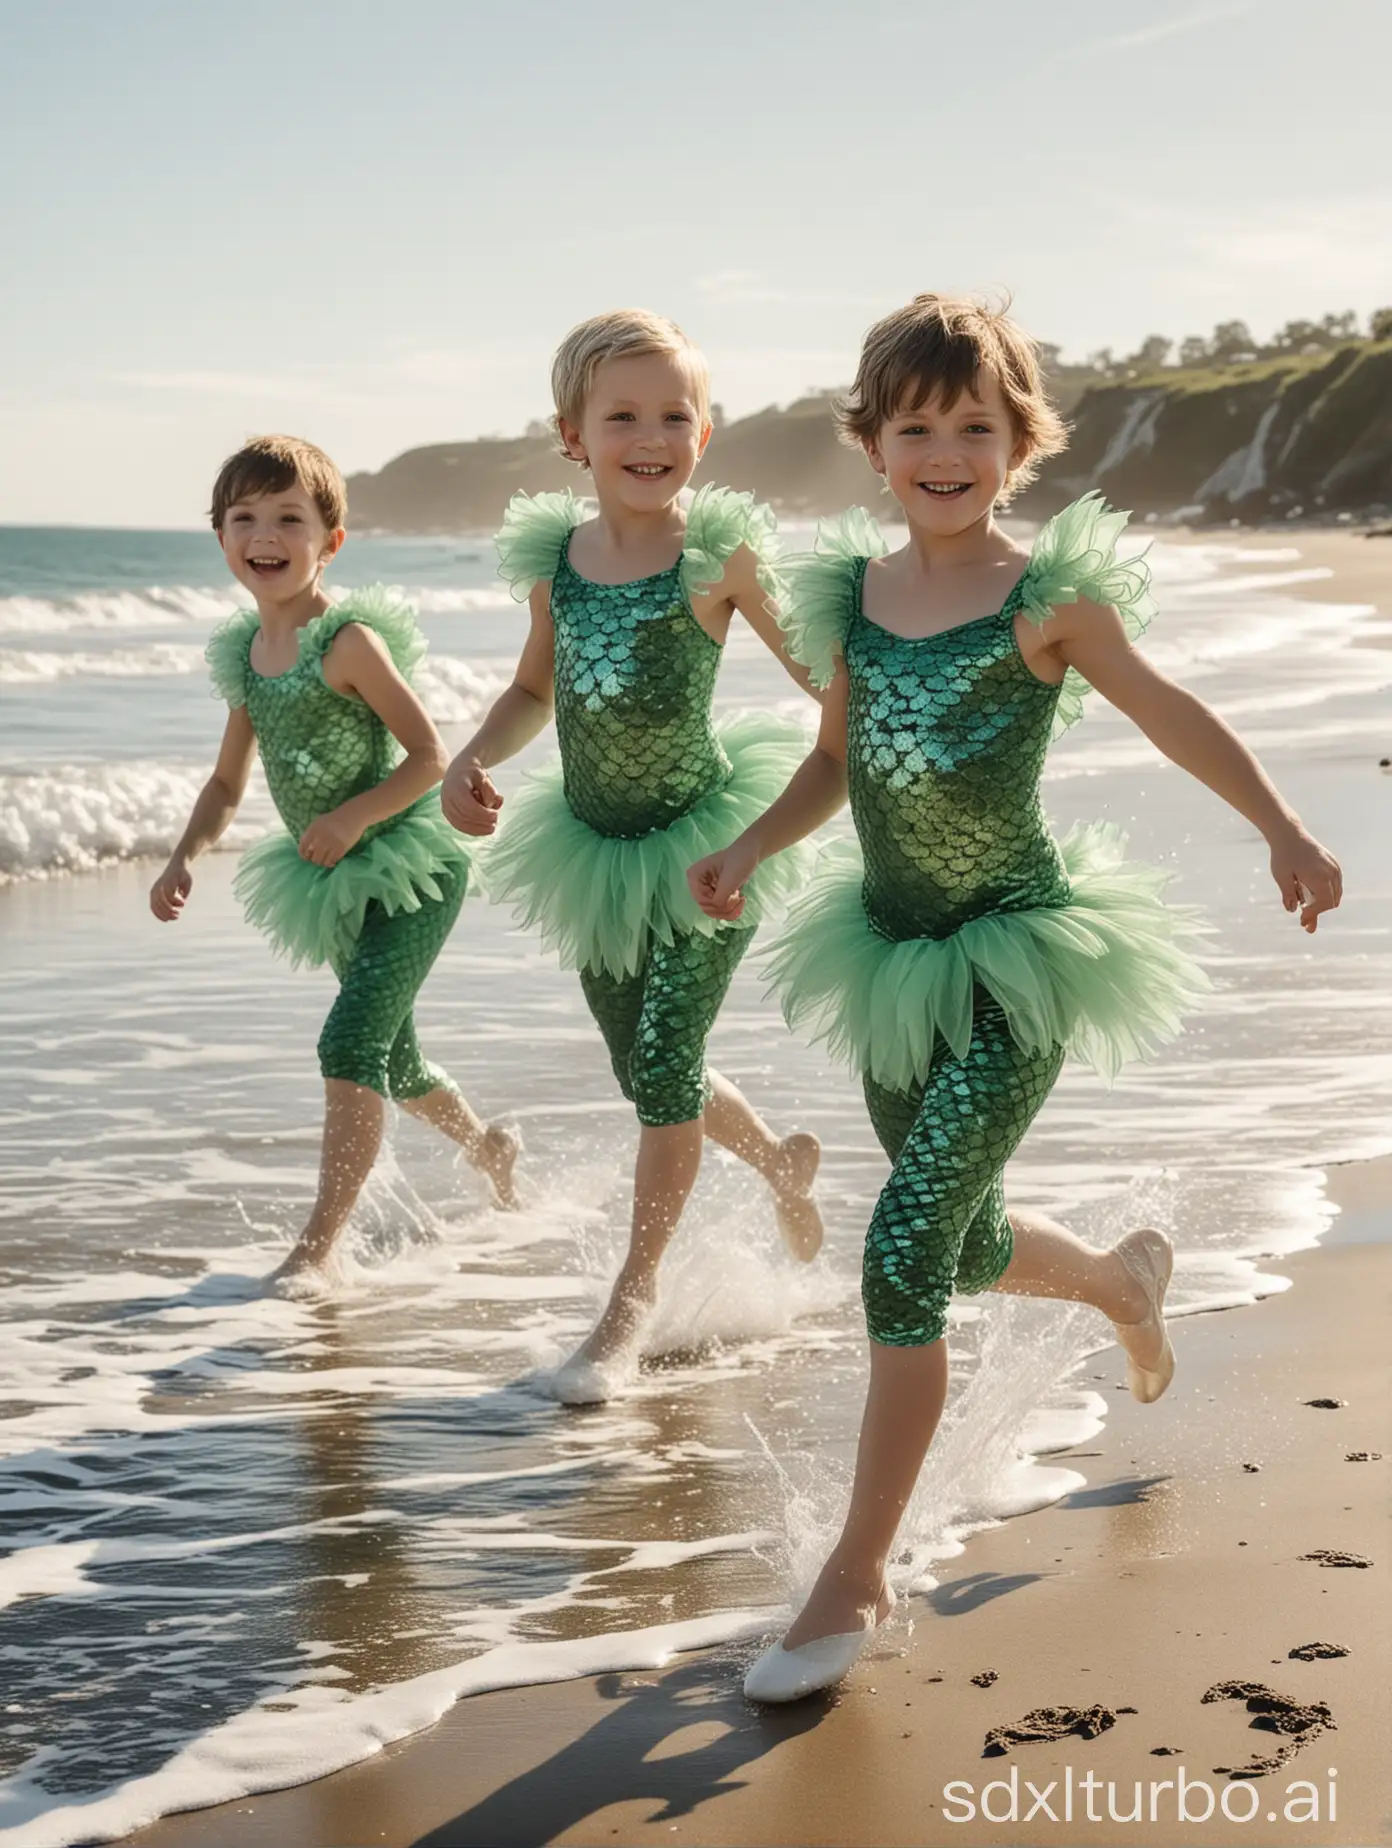 Energetic-Boys-in-BallerinaMermaid-Attire-Joyfully-Run-Along-Beach-Shoreline